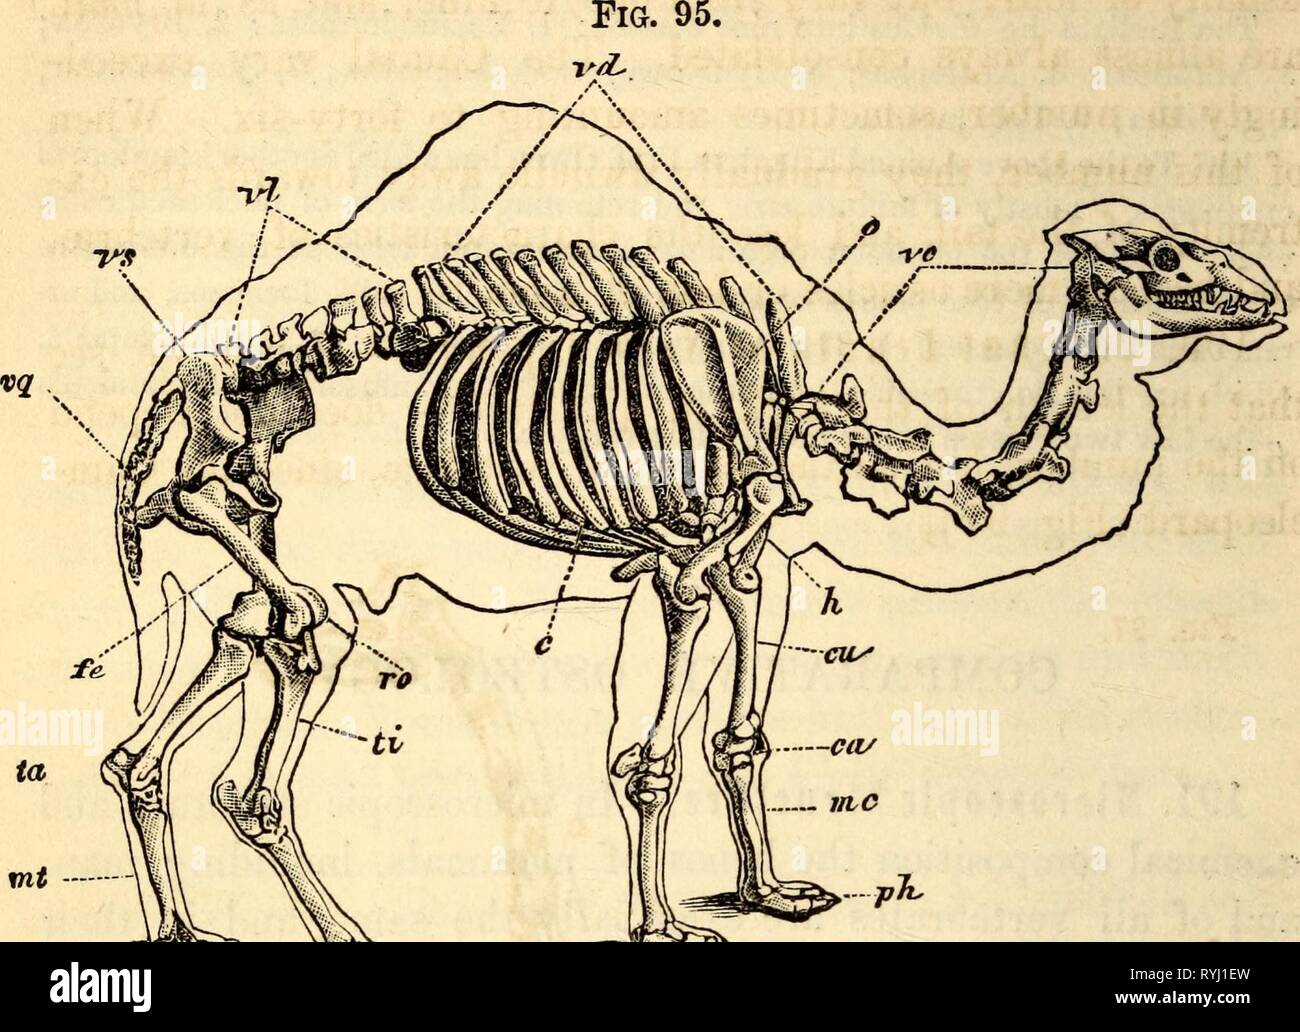 Elementary anatomy and physiology : for colleges, academies, and other schools  elementaryanato00hitc Year: 1869  86 hitchcock's anatomy    Skeleton of the Camel. c. Cervical Vertebra*. «. d. Dorsal Vertebra. * h bar Vertebra*. 8. Sacral Vertebras. *. f. Caudal Vertebra, o. Scapula, h. I rus. c. Ribs. cu. Ulna. ca. Carpus, m. c. Metacarpus, ph. Phalanges, fe. b ro. Patella, ti. Tibia, fa. Tarsus, m, t. Metatarsus, cl. Clavicle. Fig. 96. Stock Photo